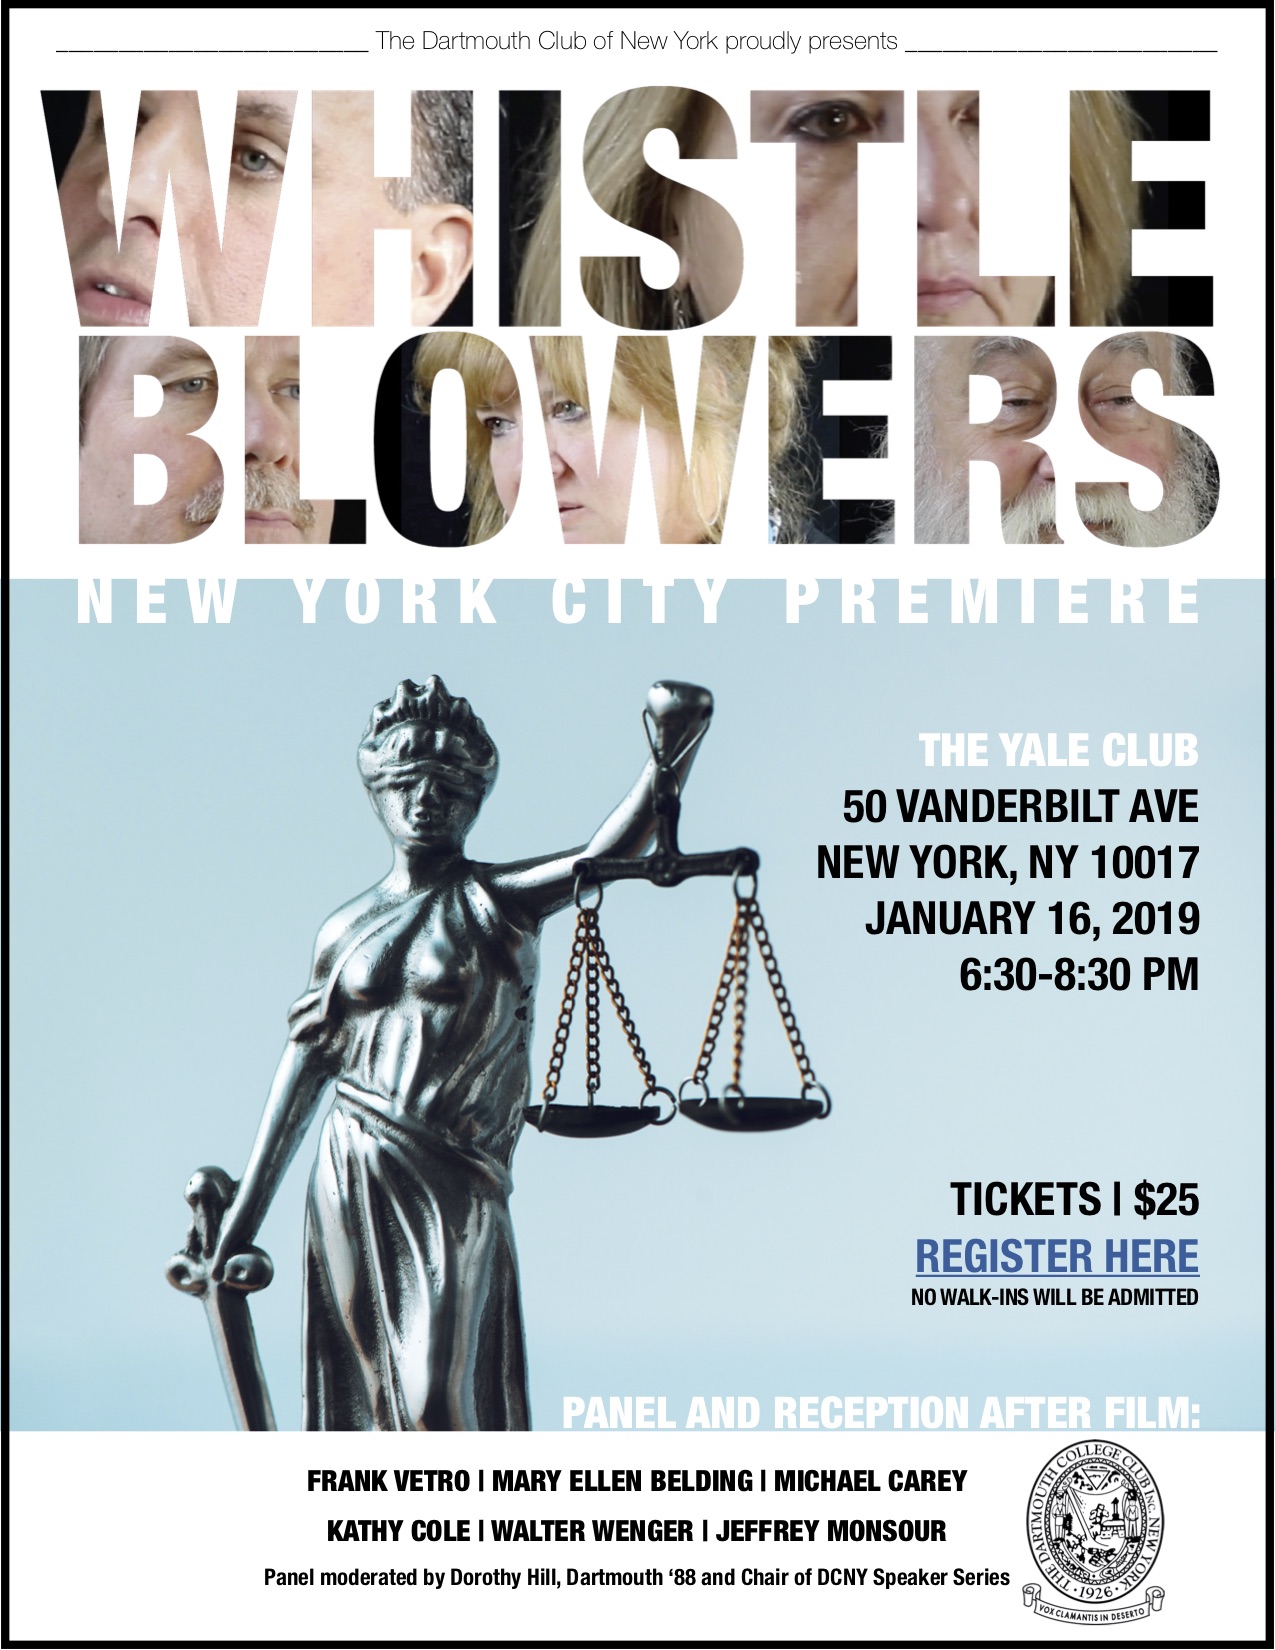 Dartmouth Club NY_Yale Club Whistleblower Premiere 16JAN2019